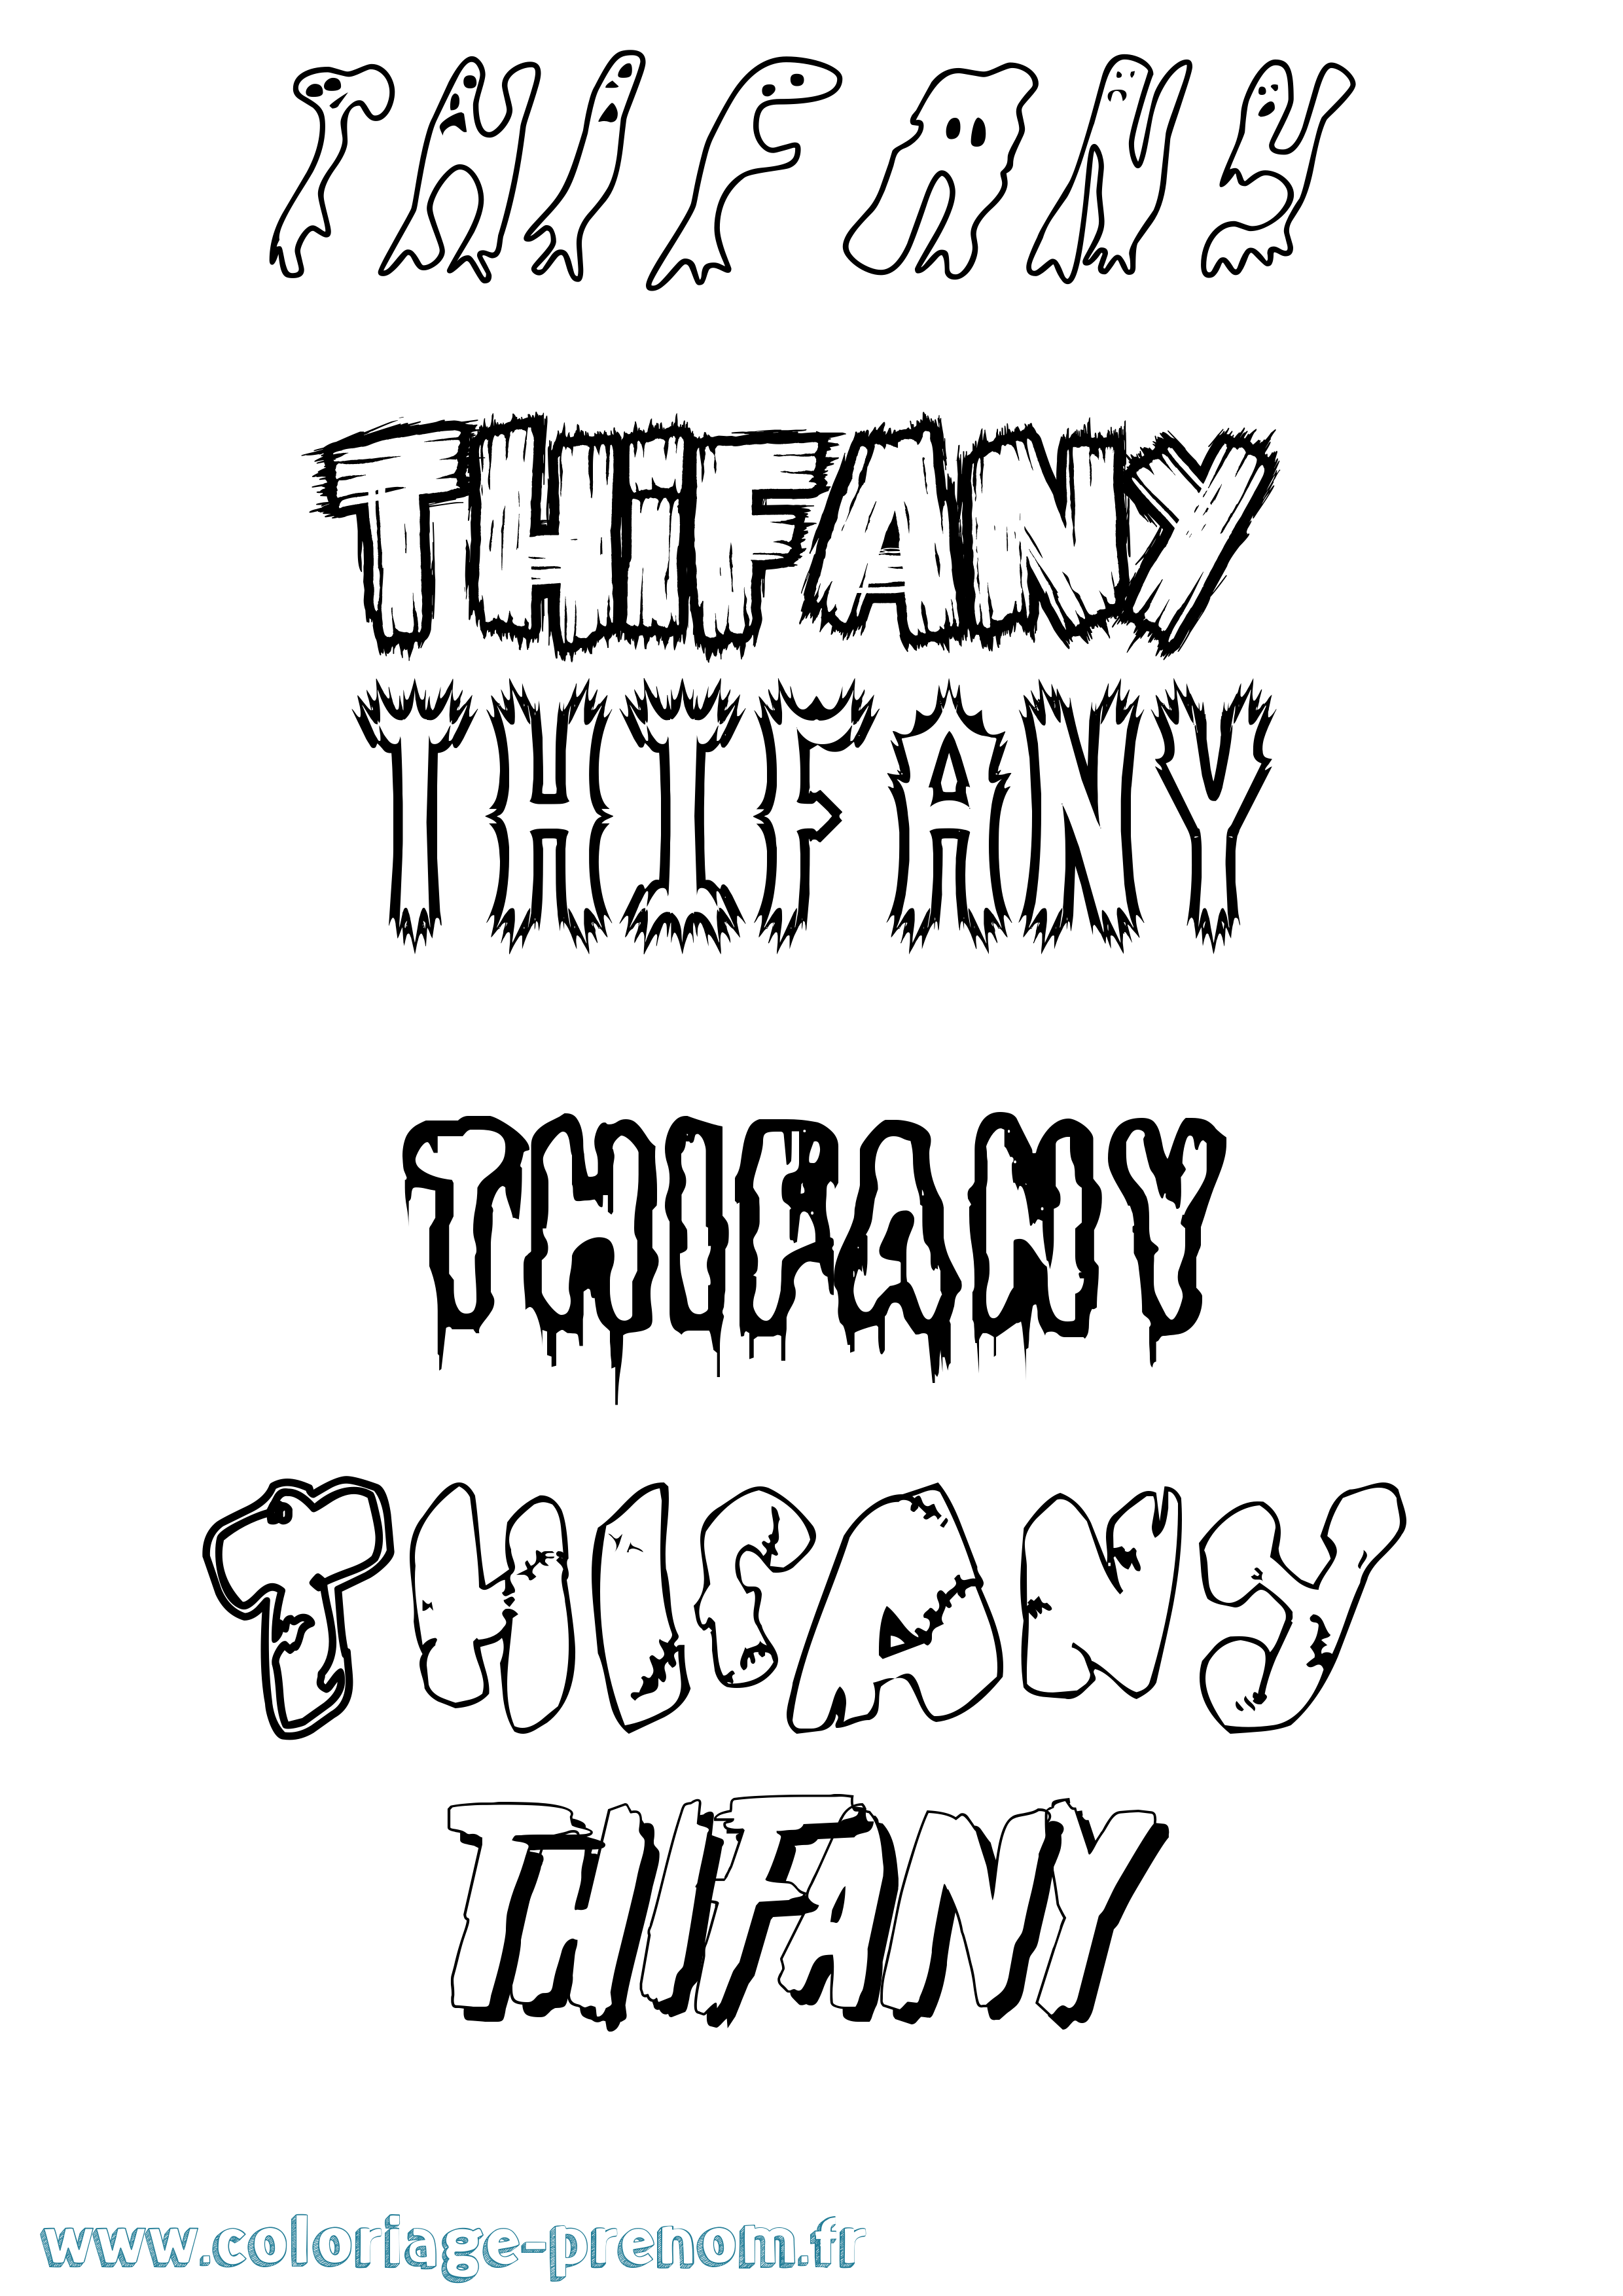 Coloriage prénom Thifany Frisson